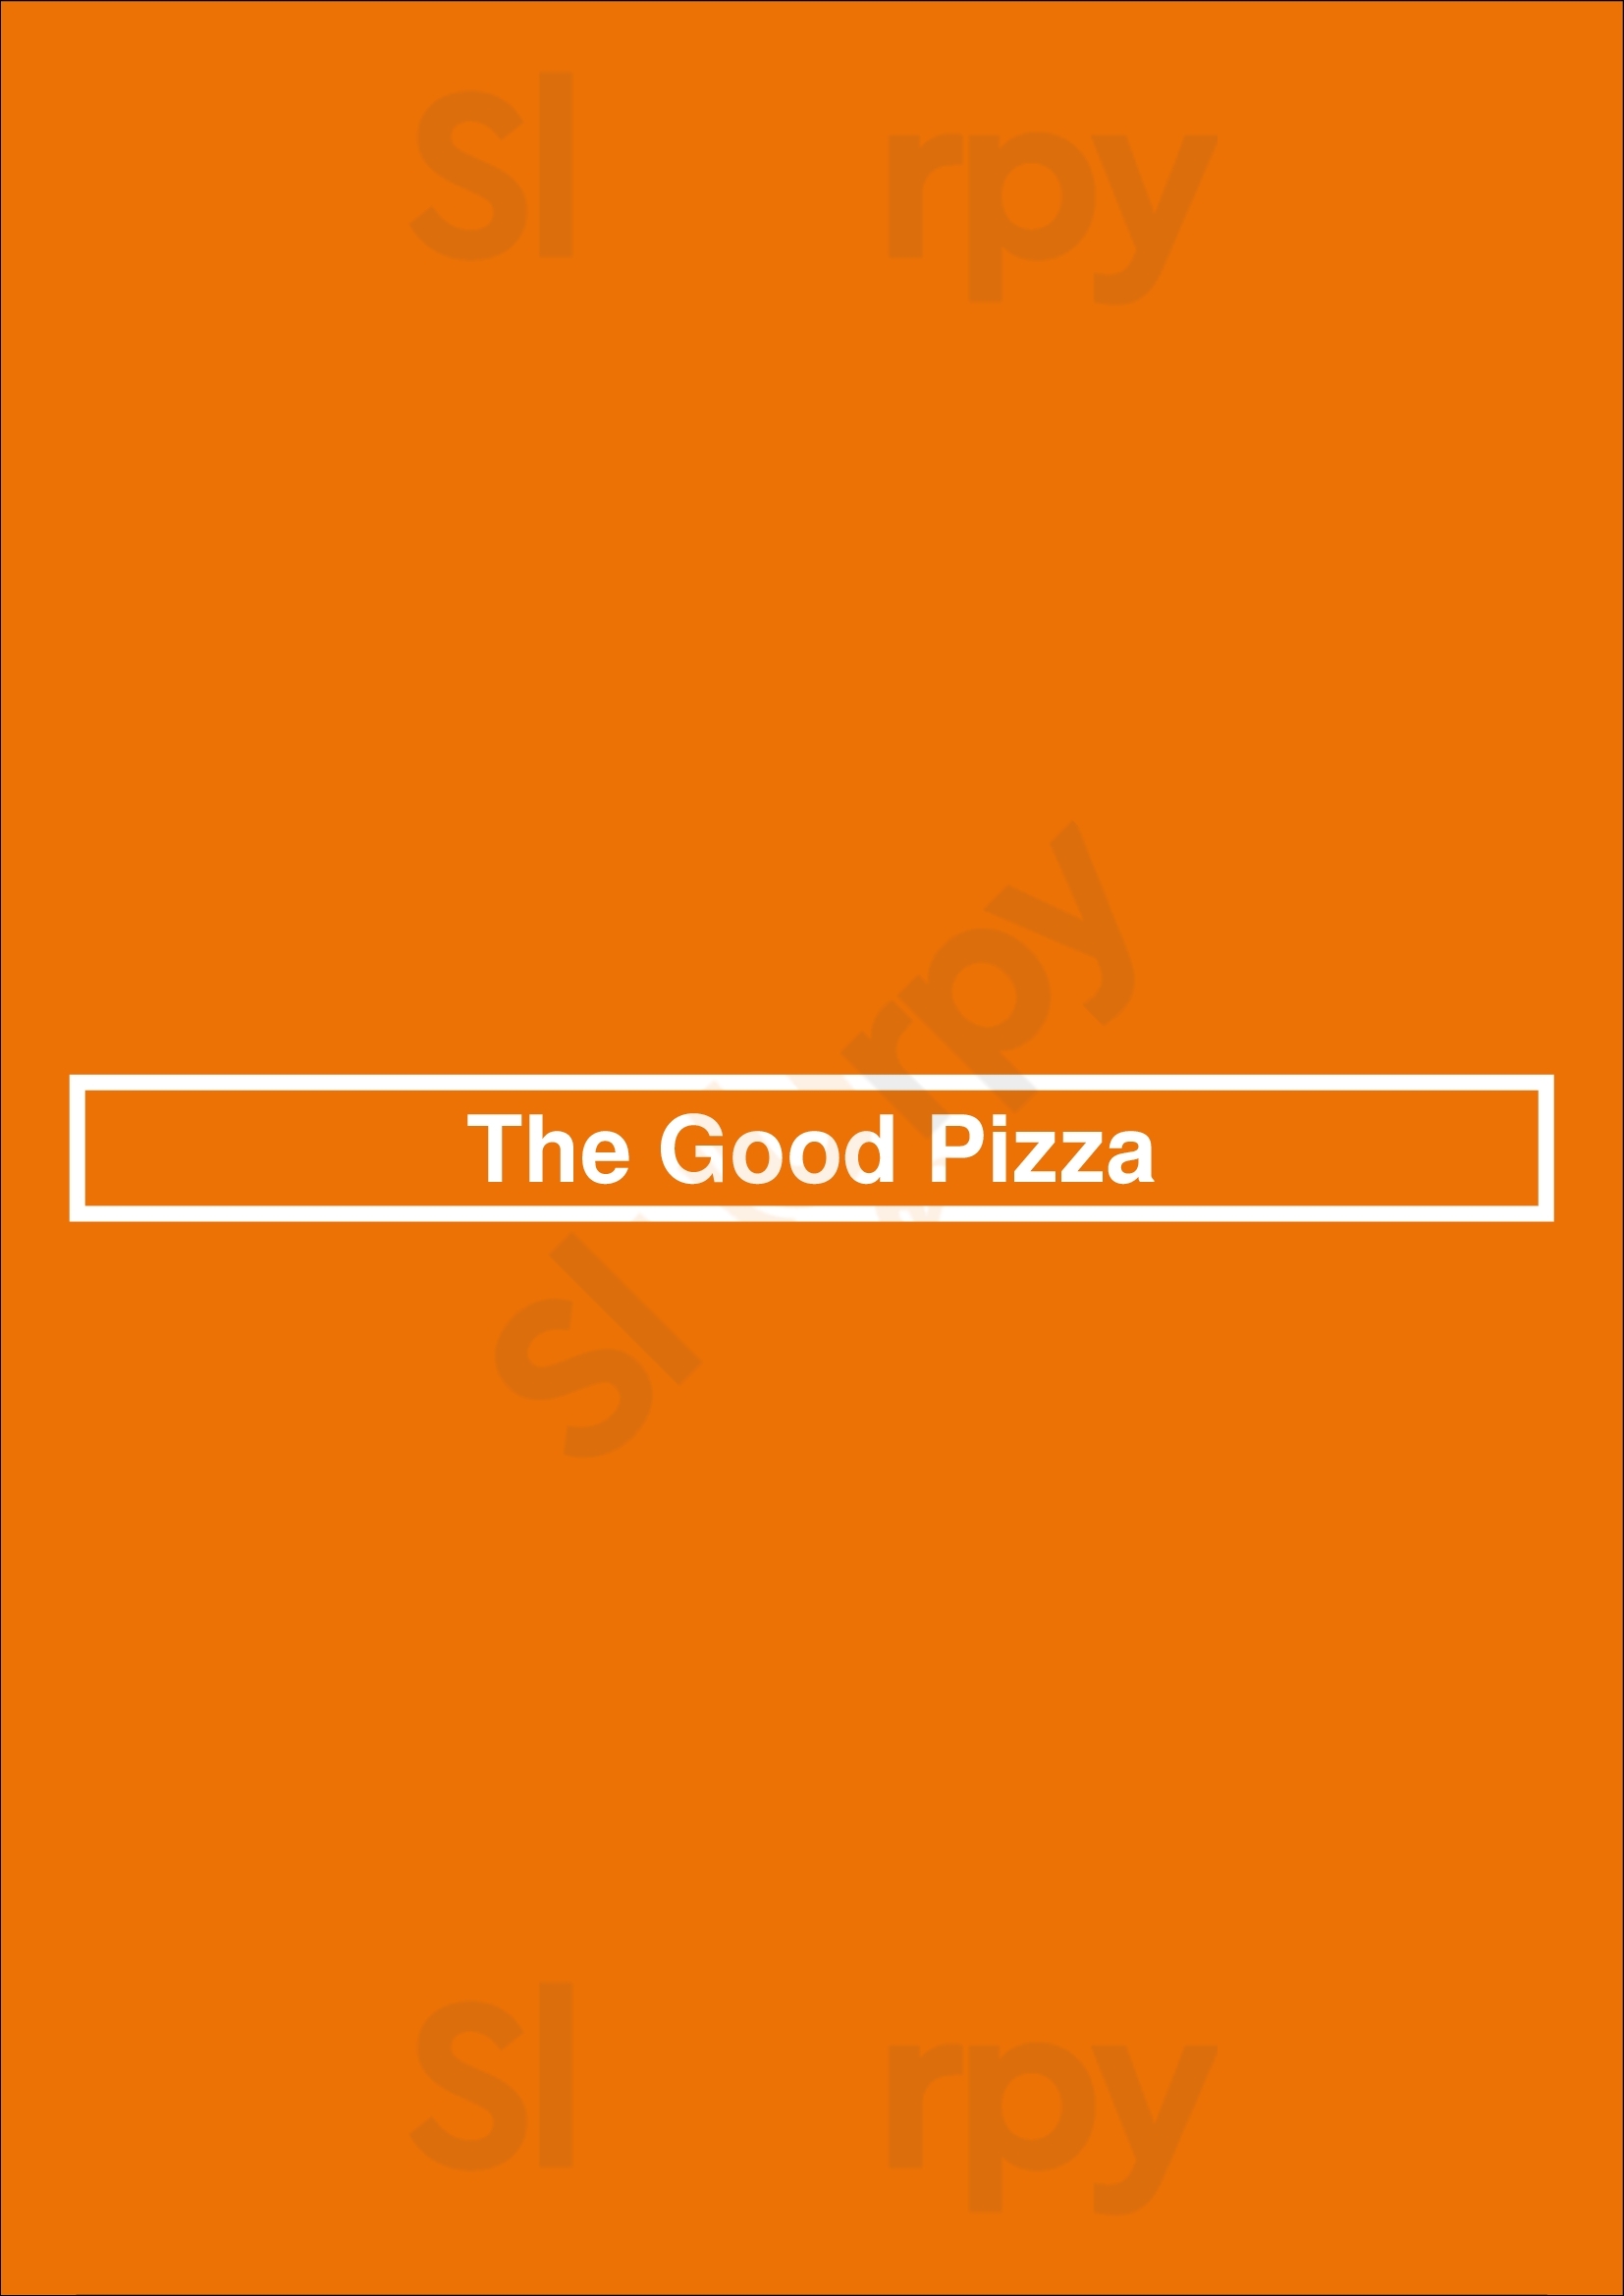 The Good Pizza Los Angeles Menu - 1